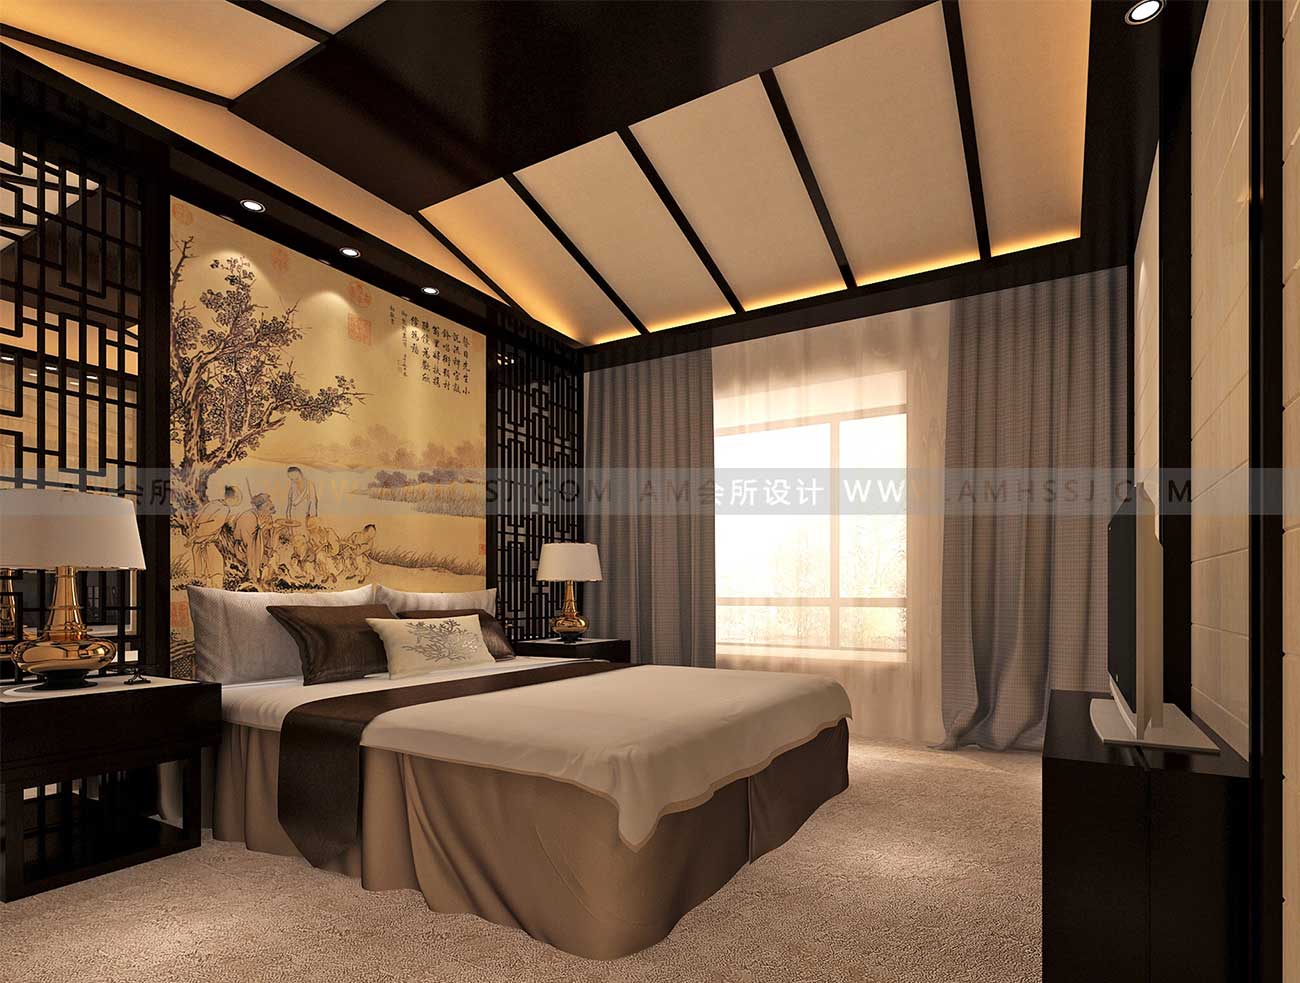 AM DESIGN | Guest room design of Junshan private club